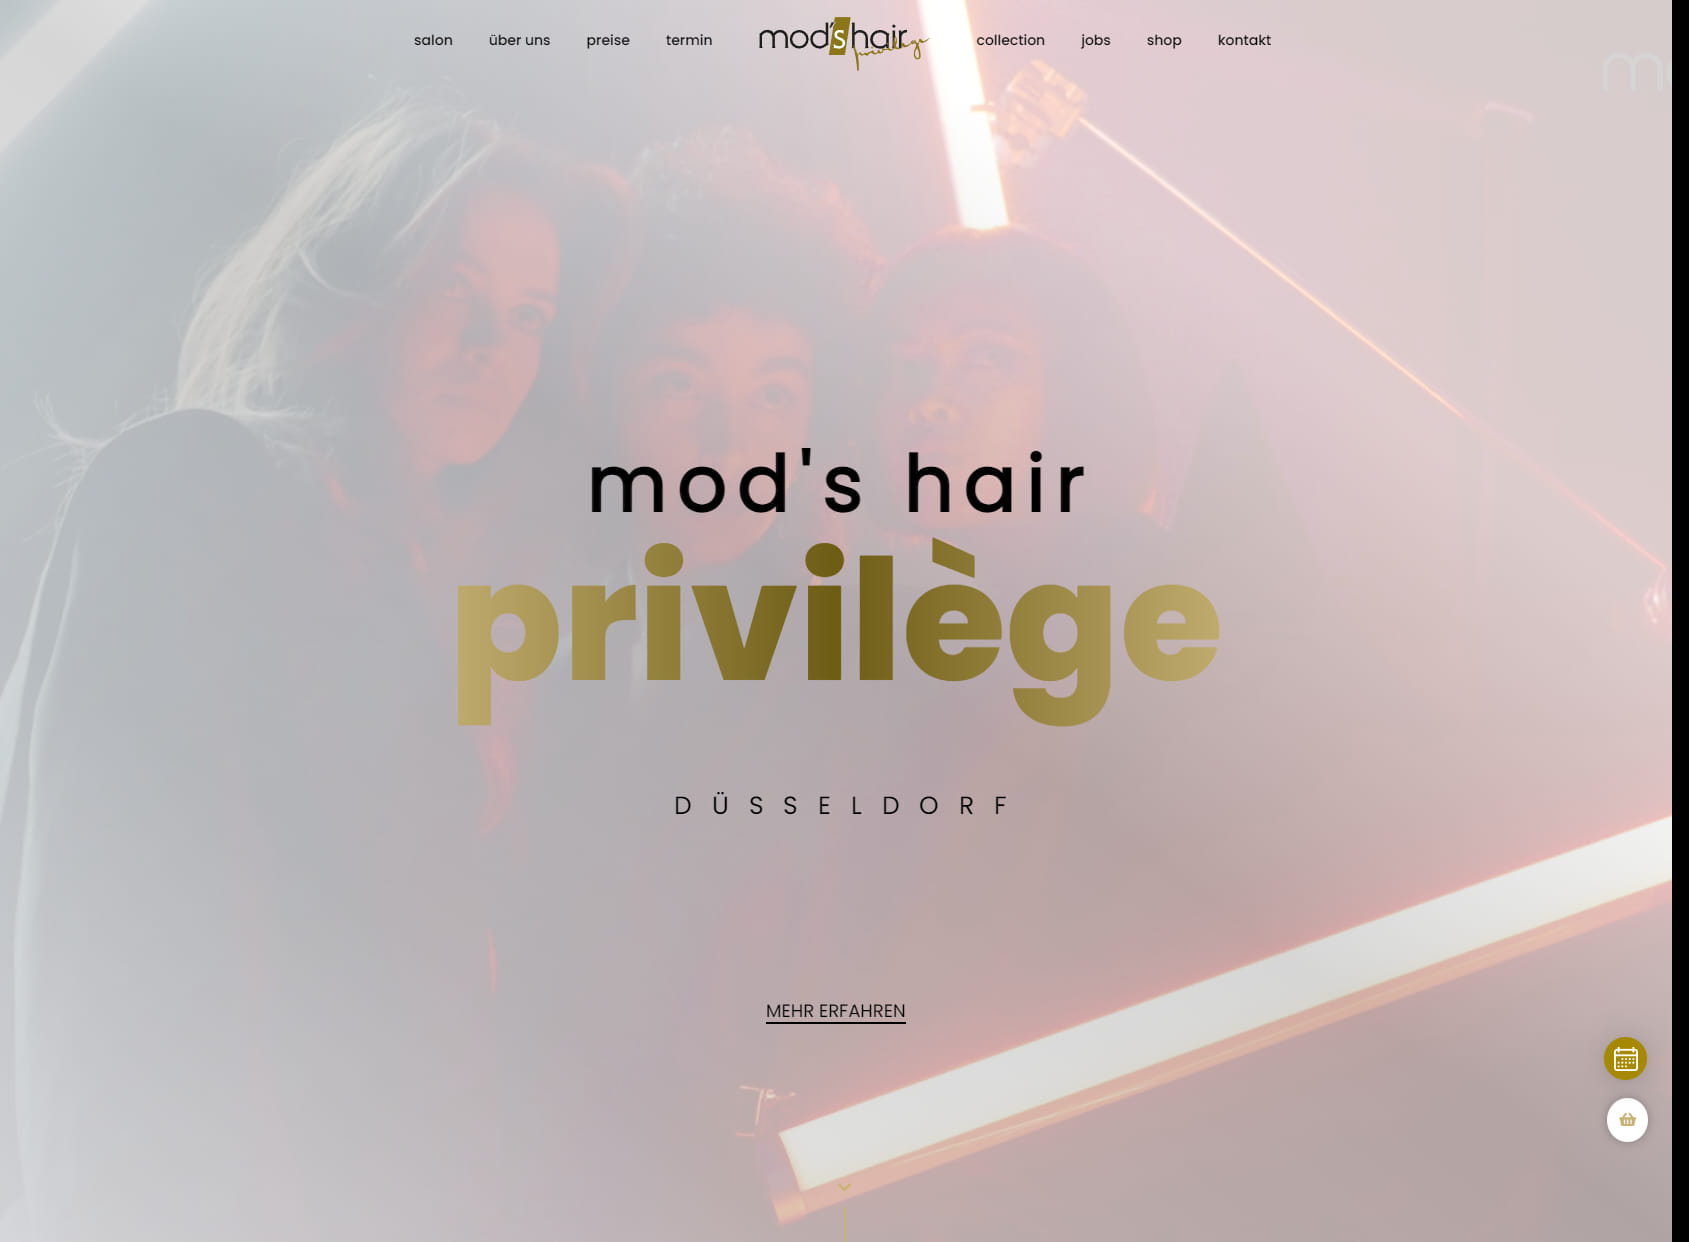 mod's hair privilège